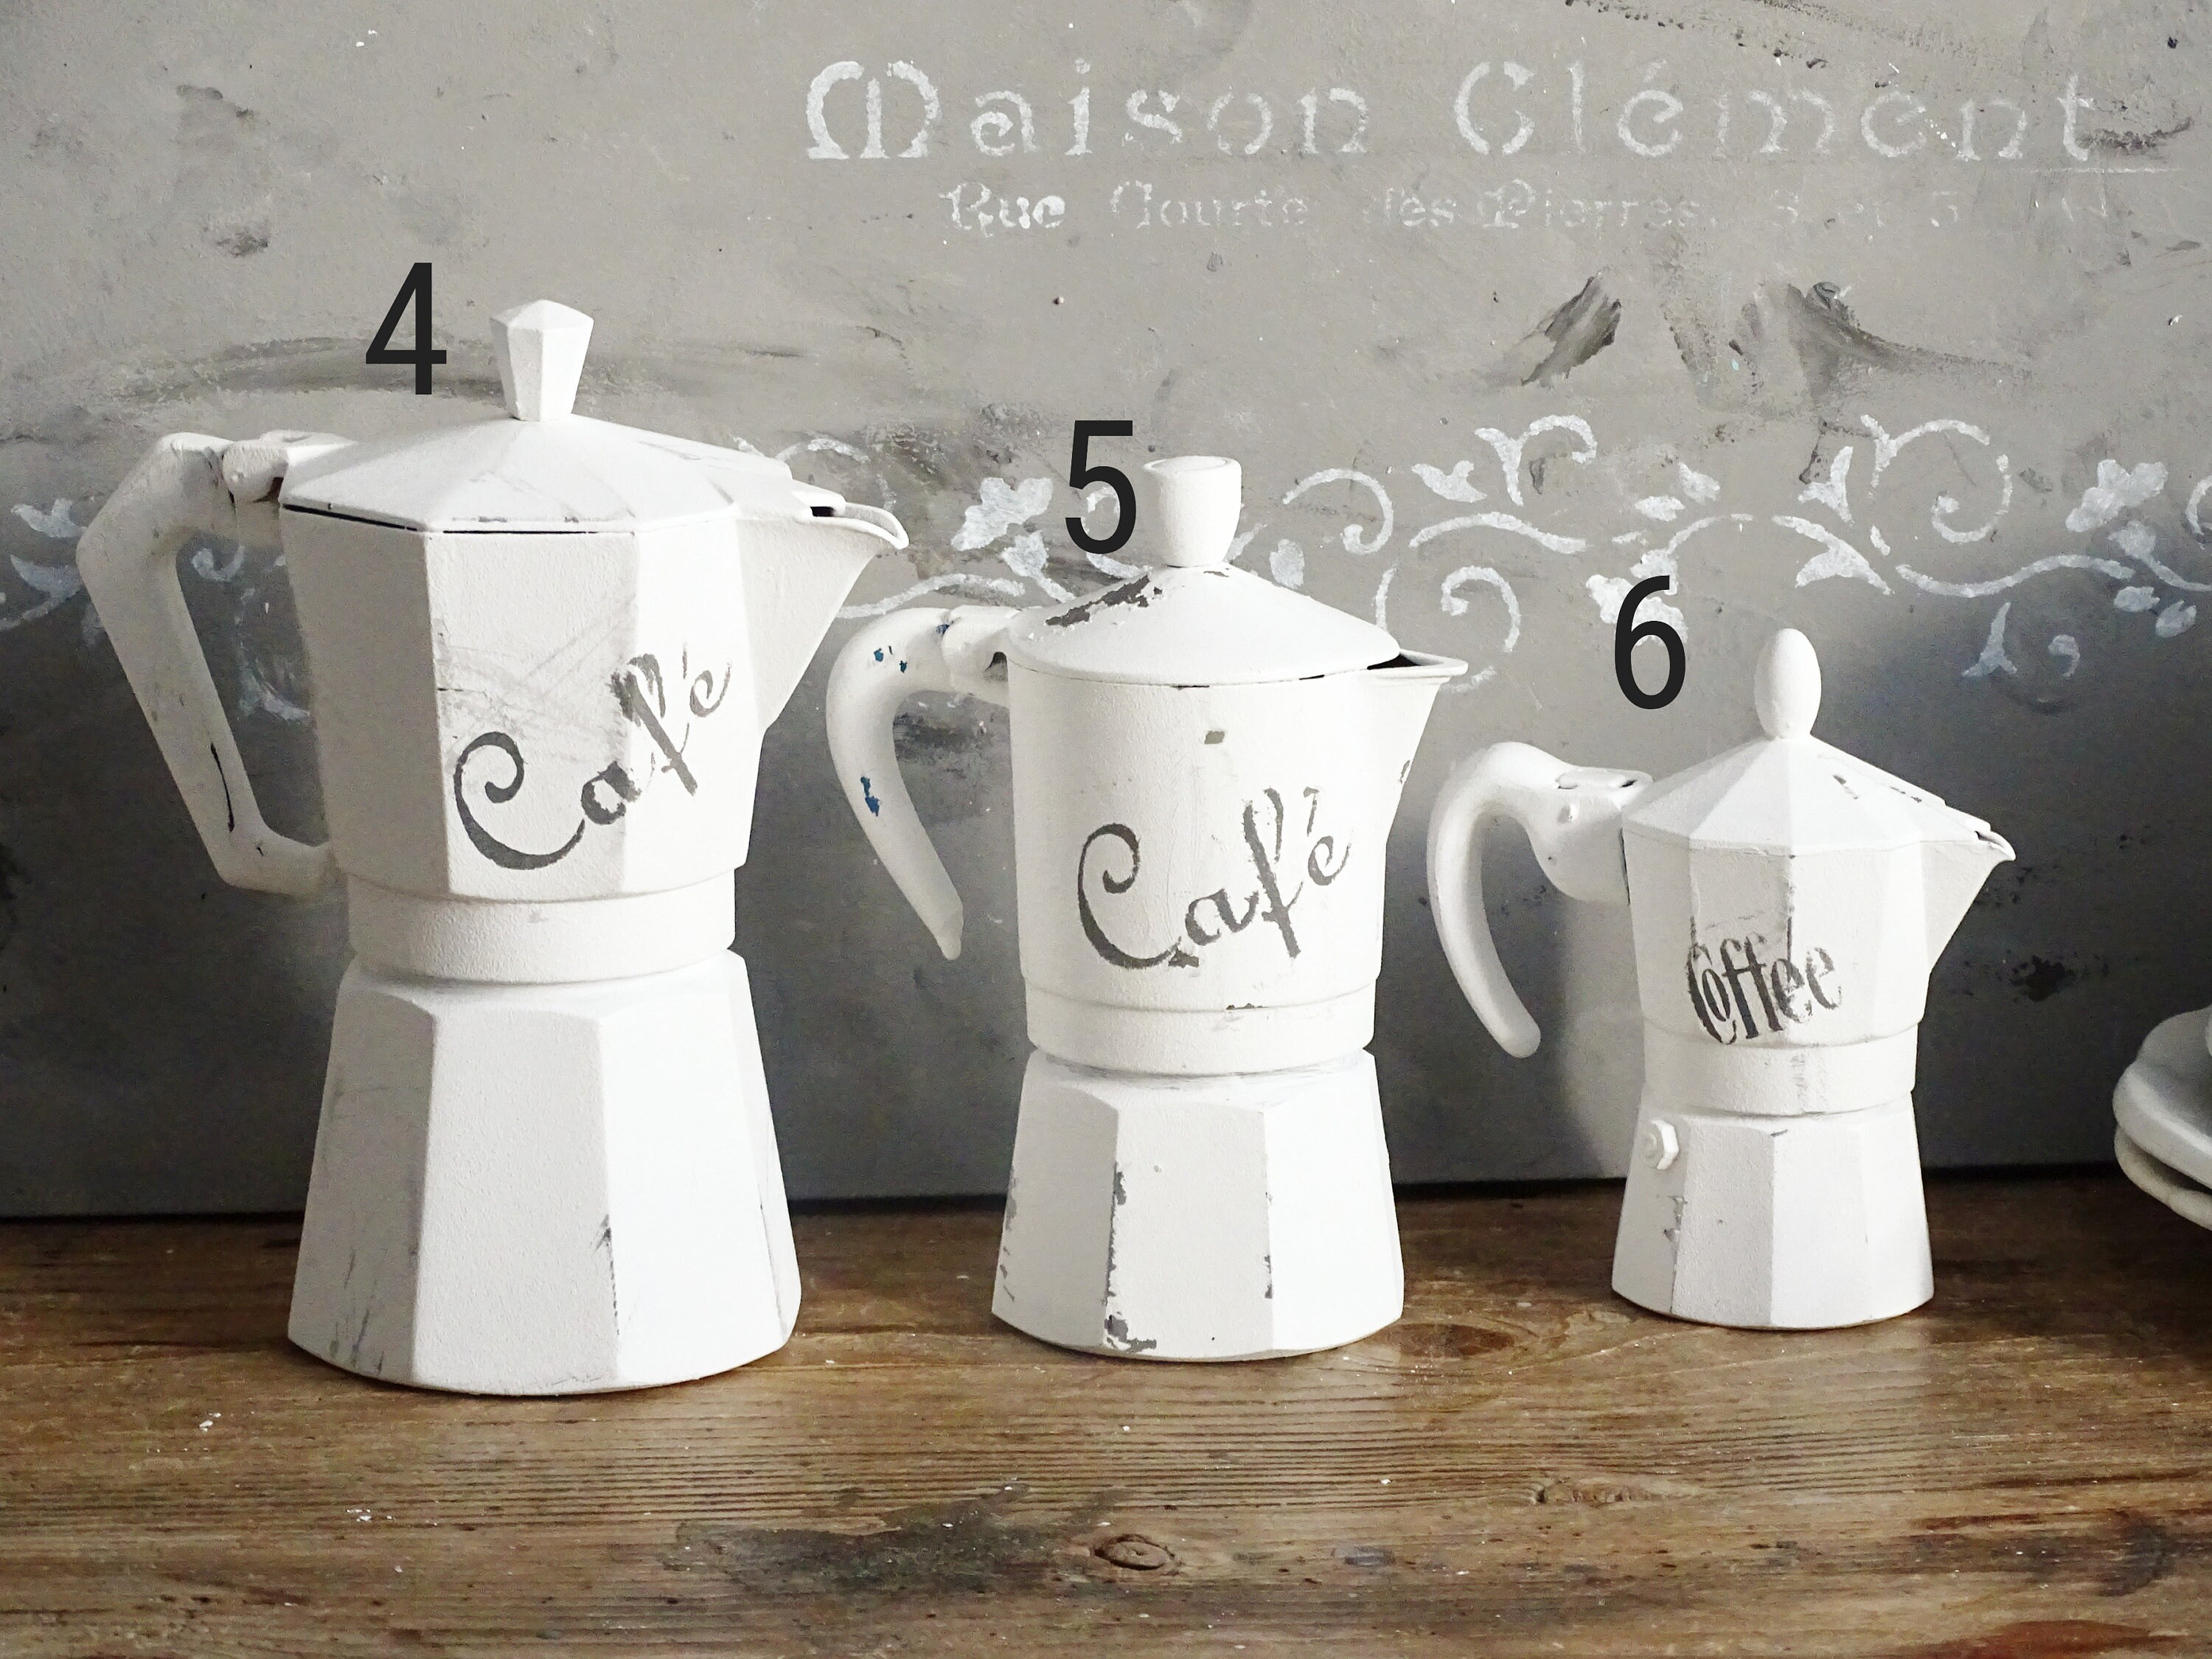 Design and Inquiry - Bialetti Moka Coffee Pot